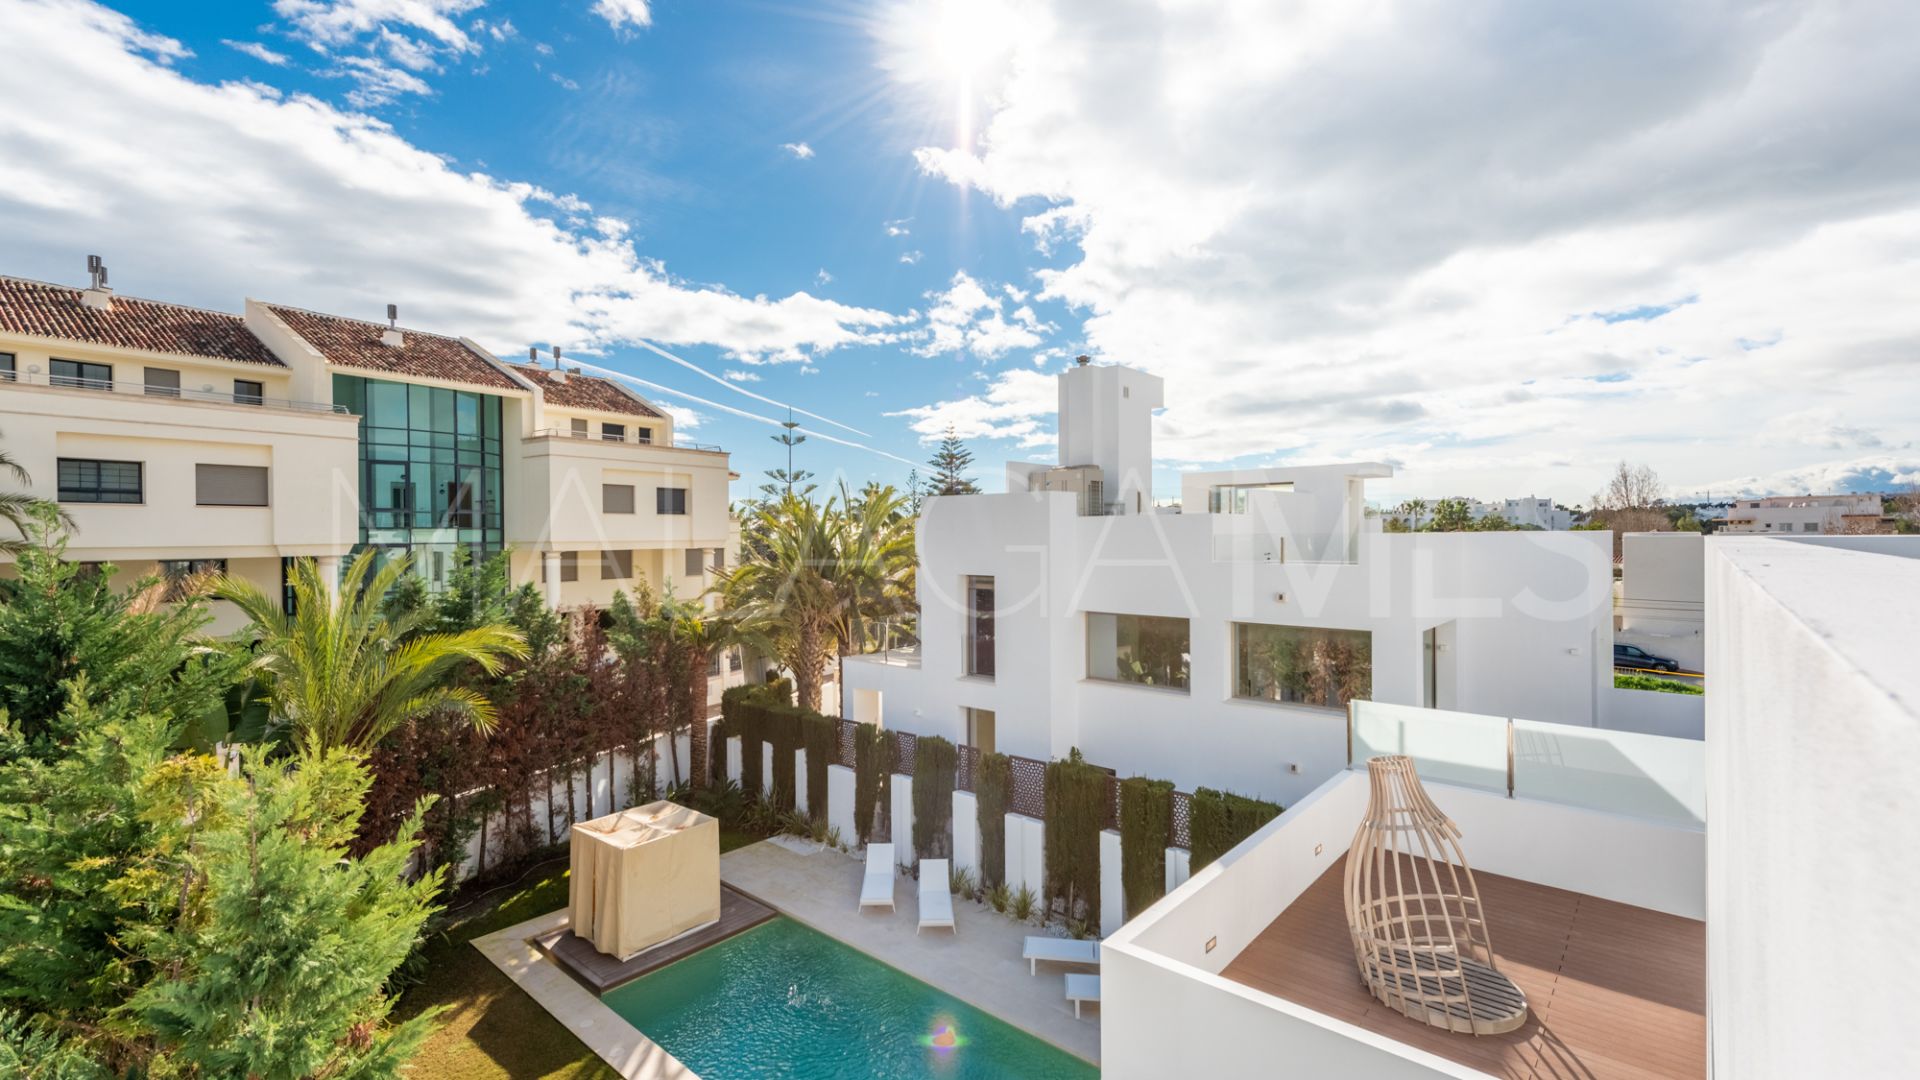 Villa for sale in Rio Verde Playa with 4 bedrooms